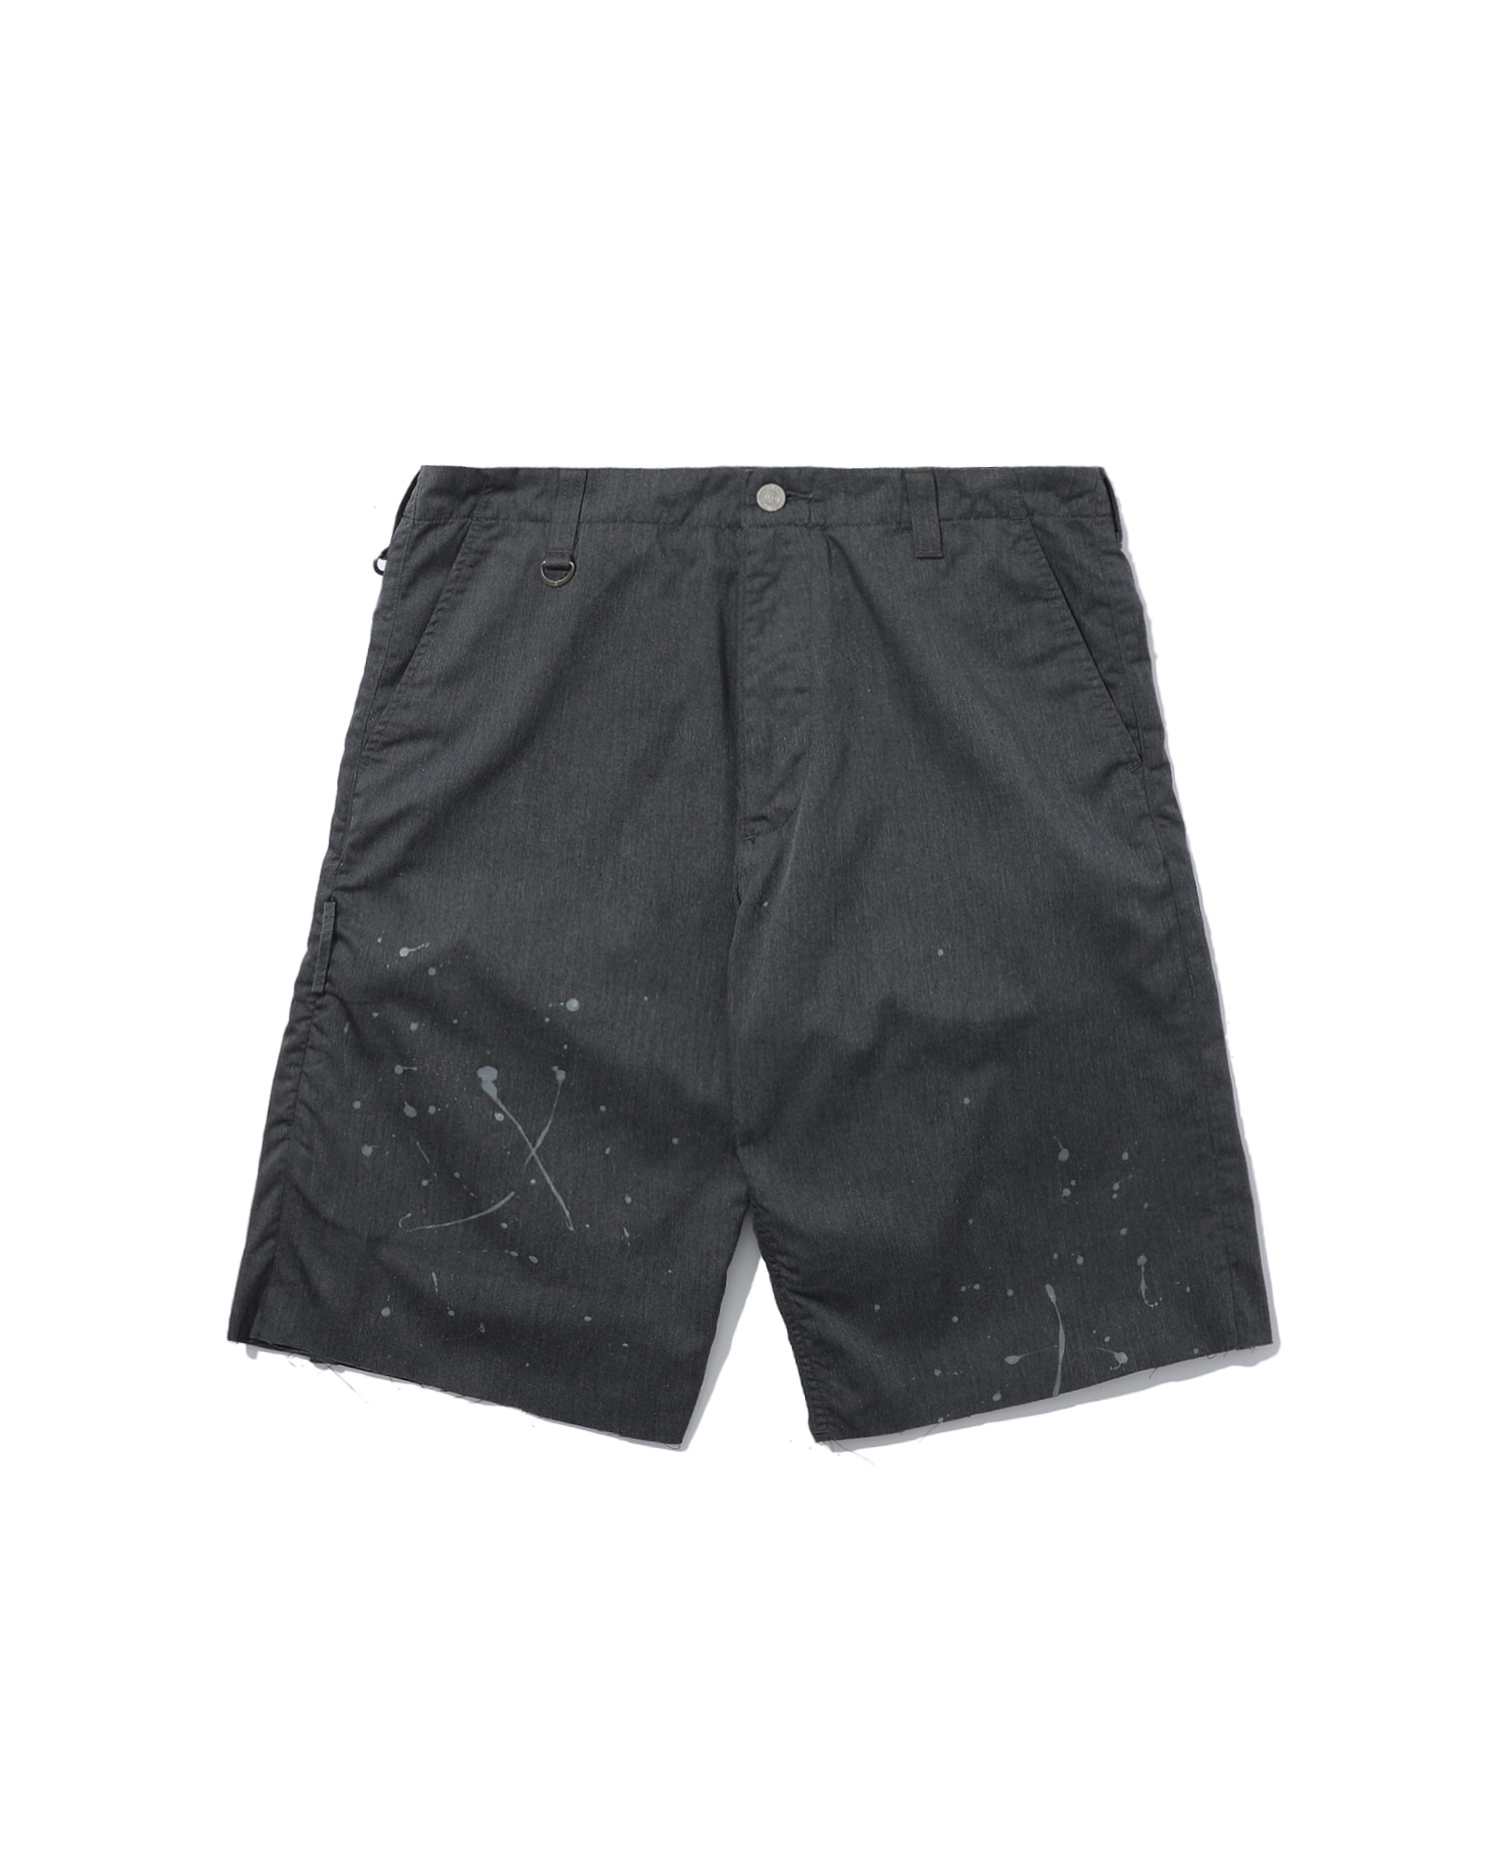 UNIFORM EXPERIMENT Dripping shorts| ITeSHOP